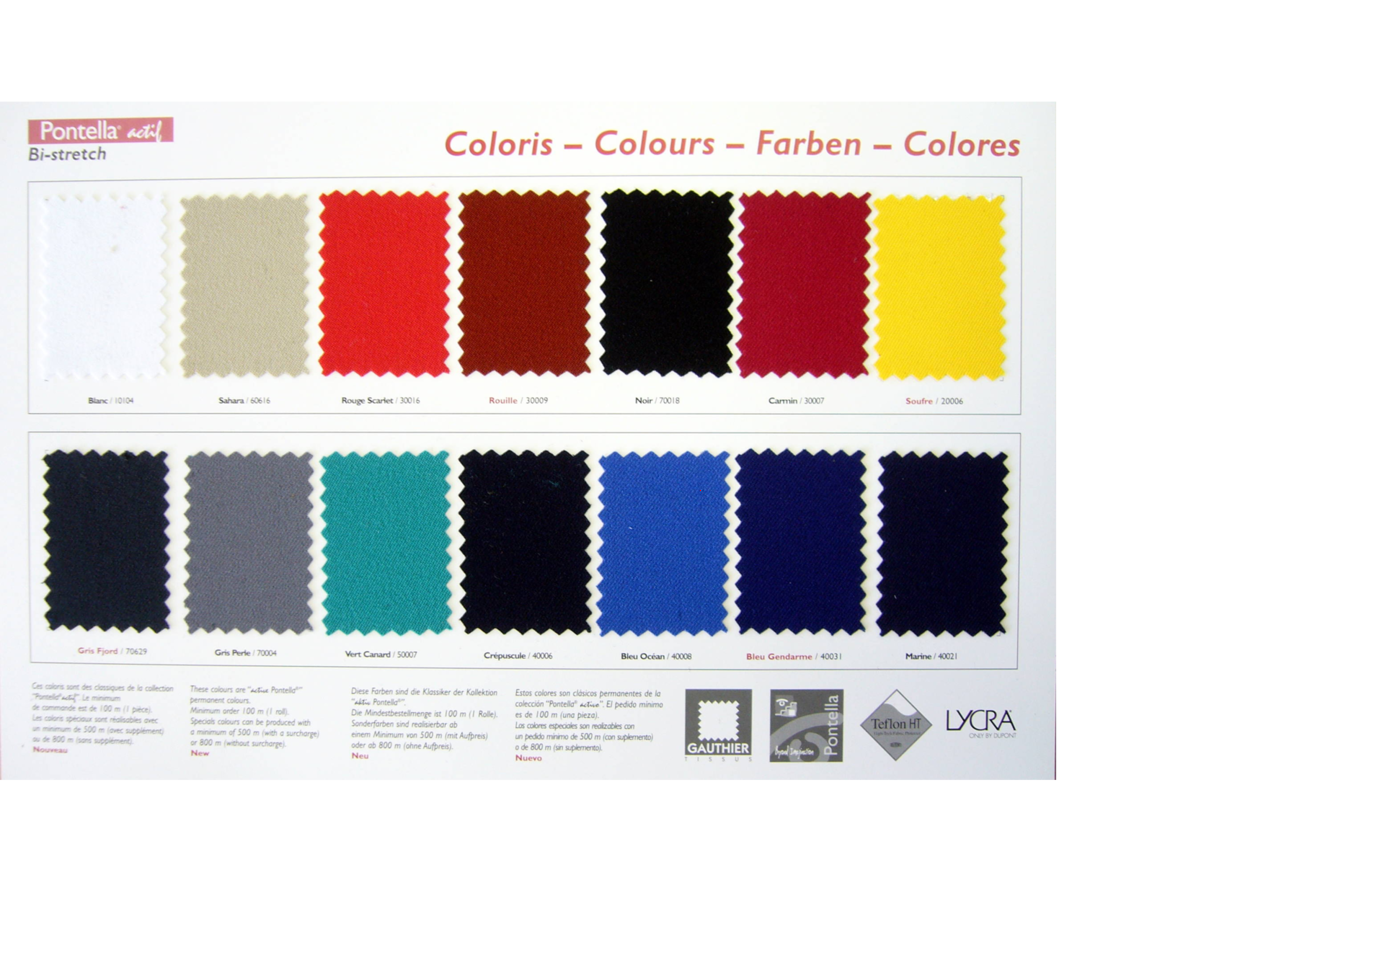 Colour range of Pontella actif fabrics